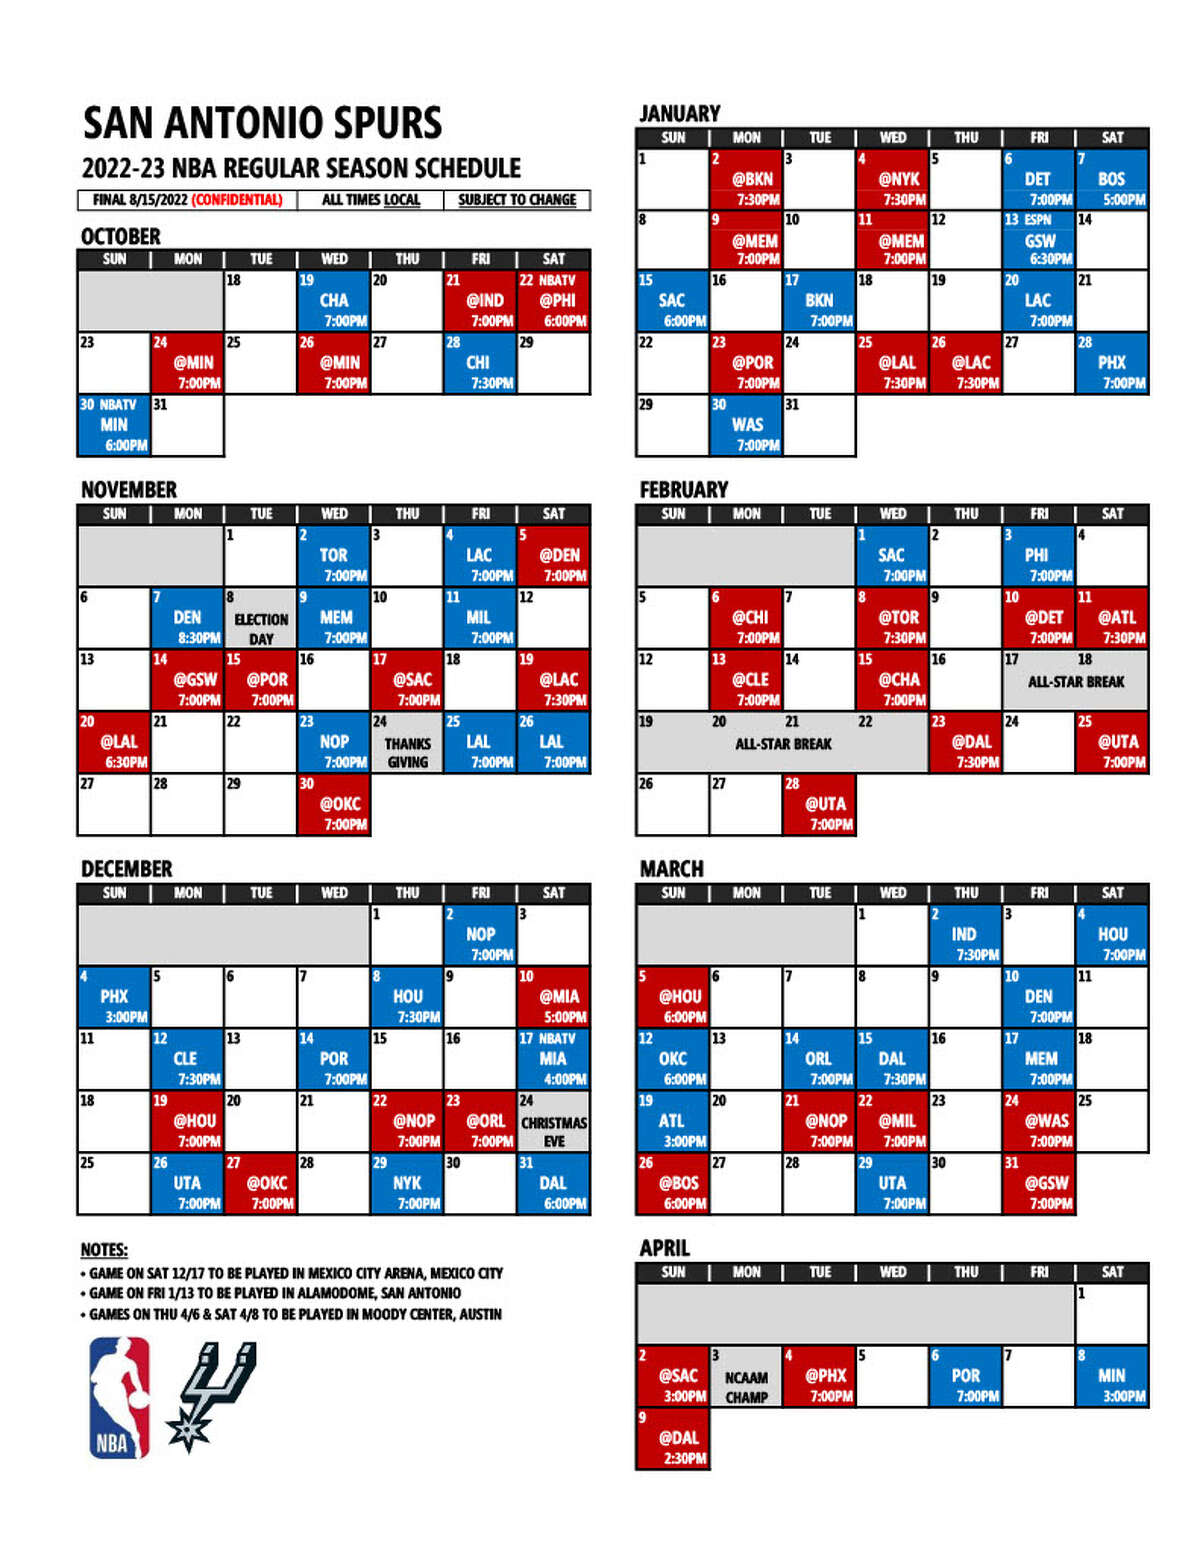 Breaking down the San Antonio Spurs’ 2022-23 schedule